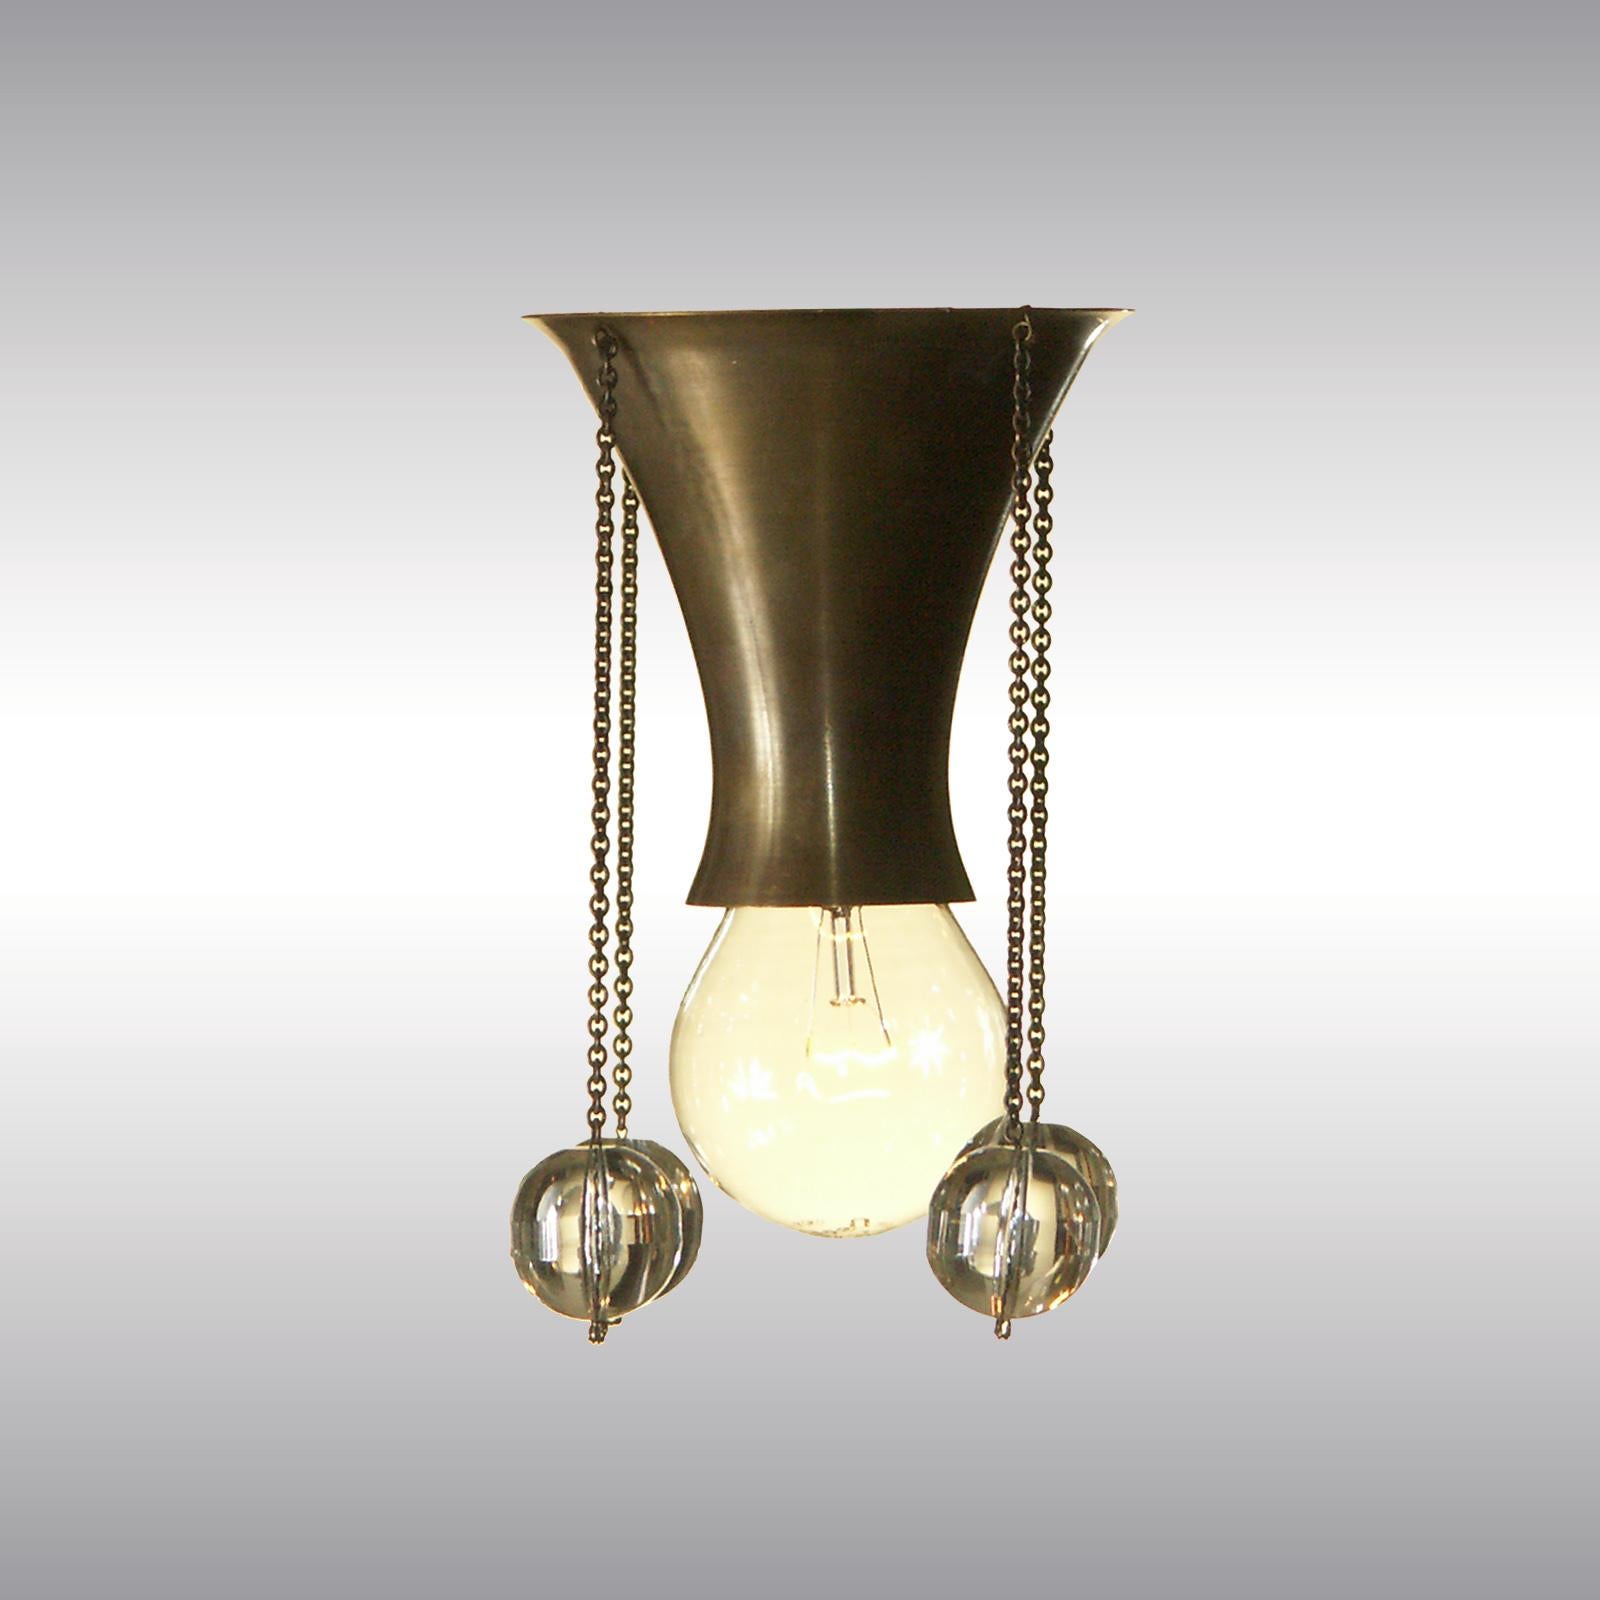 Austrian Josef Hoffmann Wiener Werkstaette Jugendstil Ceiling Lamp